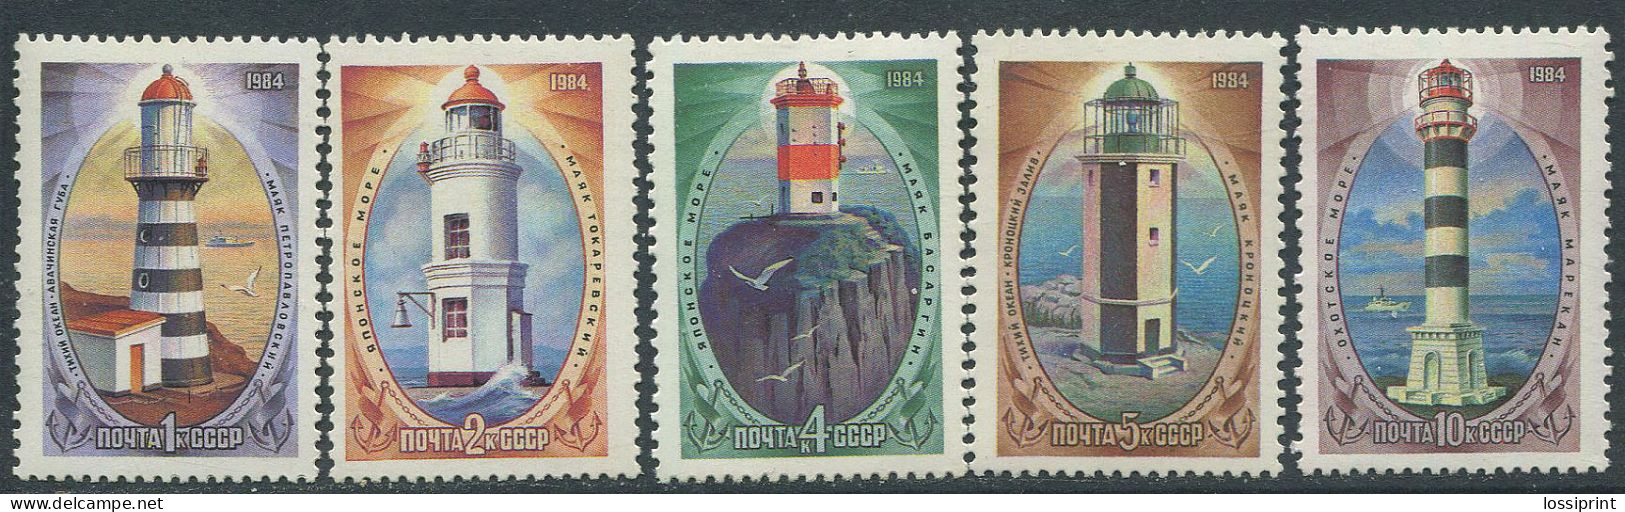 Soviet Union:Russia:USSR:Unused Stamps Serie Lighthouses, Petropavlovsk, Tokarevski, Basargin, Kronotski, 1984, MNH - Faros